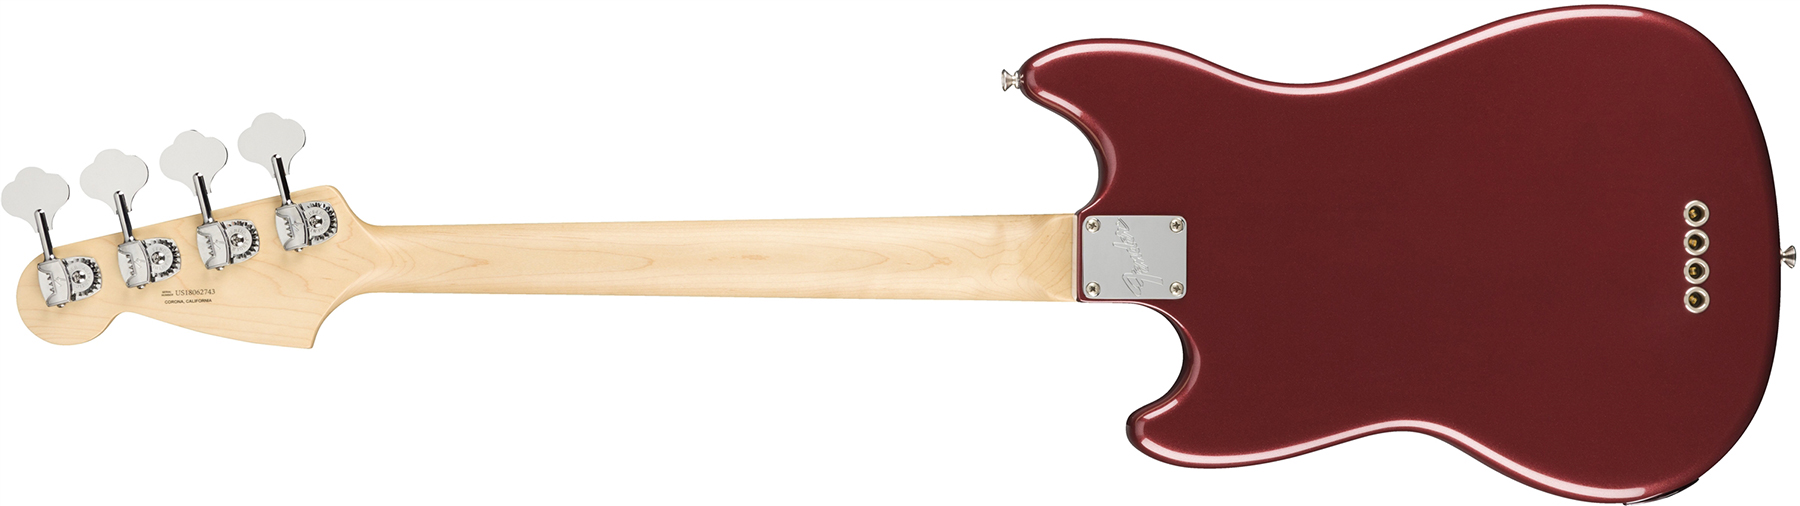 Fender Mustang Bass American Performer Usa Rw - Aubergine - Bajo eléctrico para niños - Variation 1